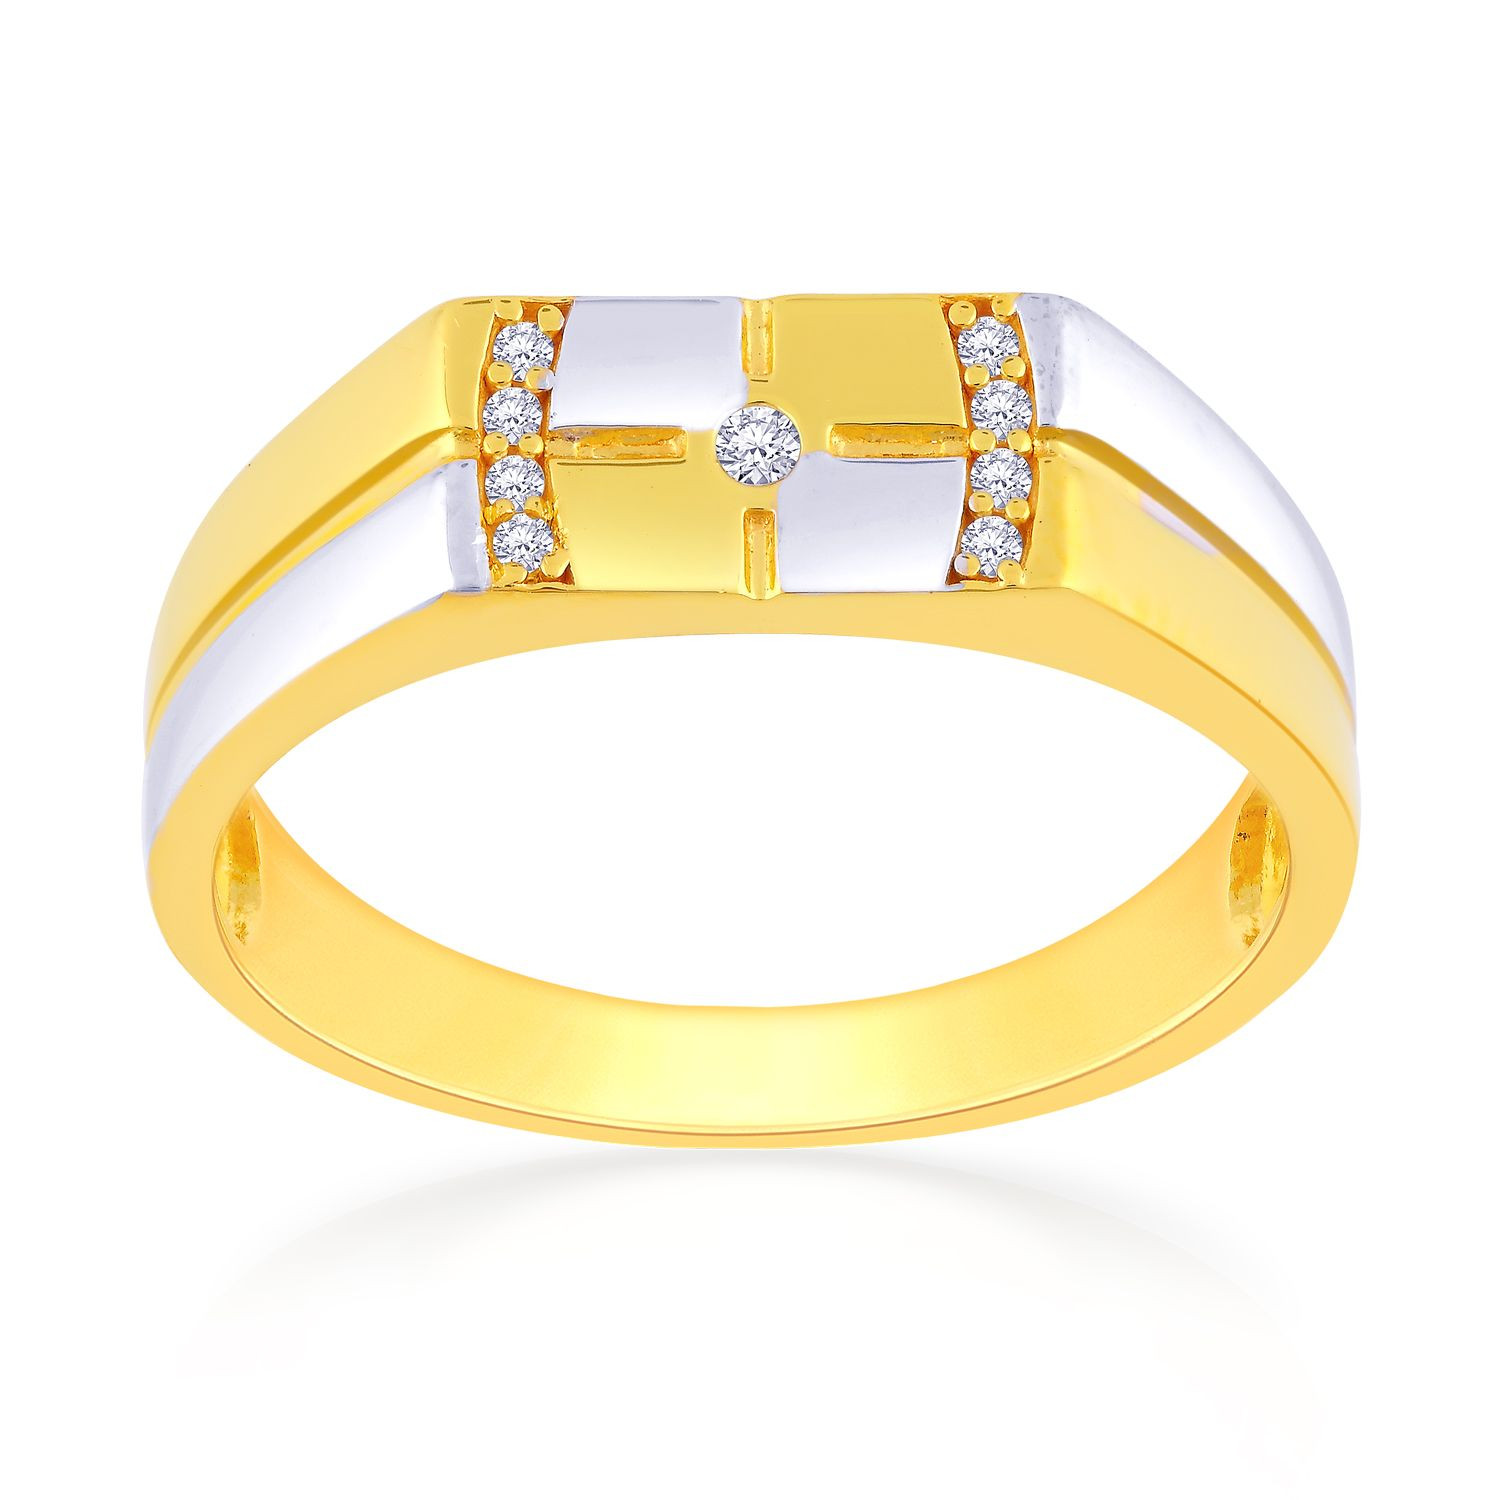 Buy white/yellow Rings for Men by Malabar Gold & Diamonds Online | Ajio.com